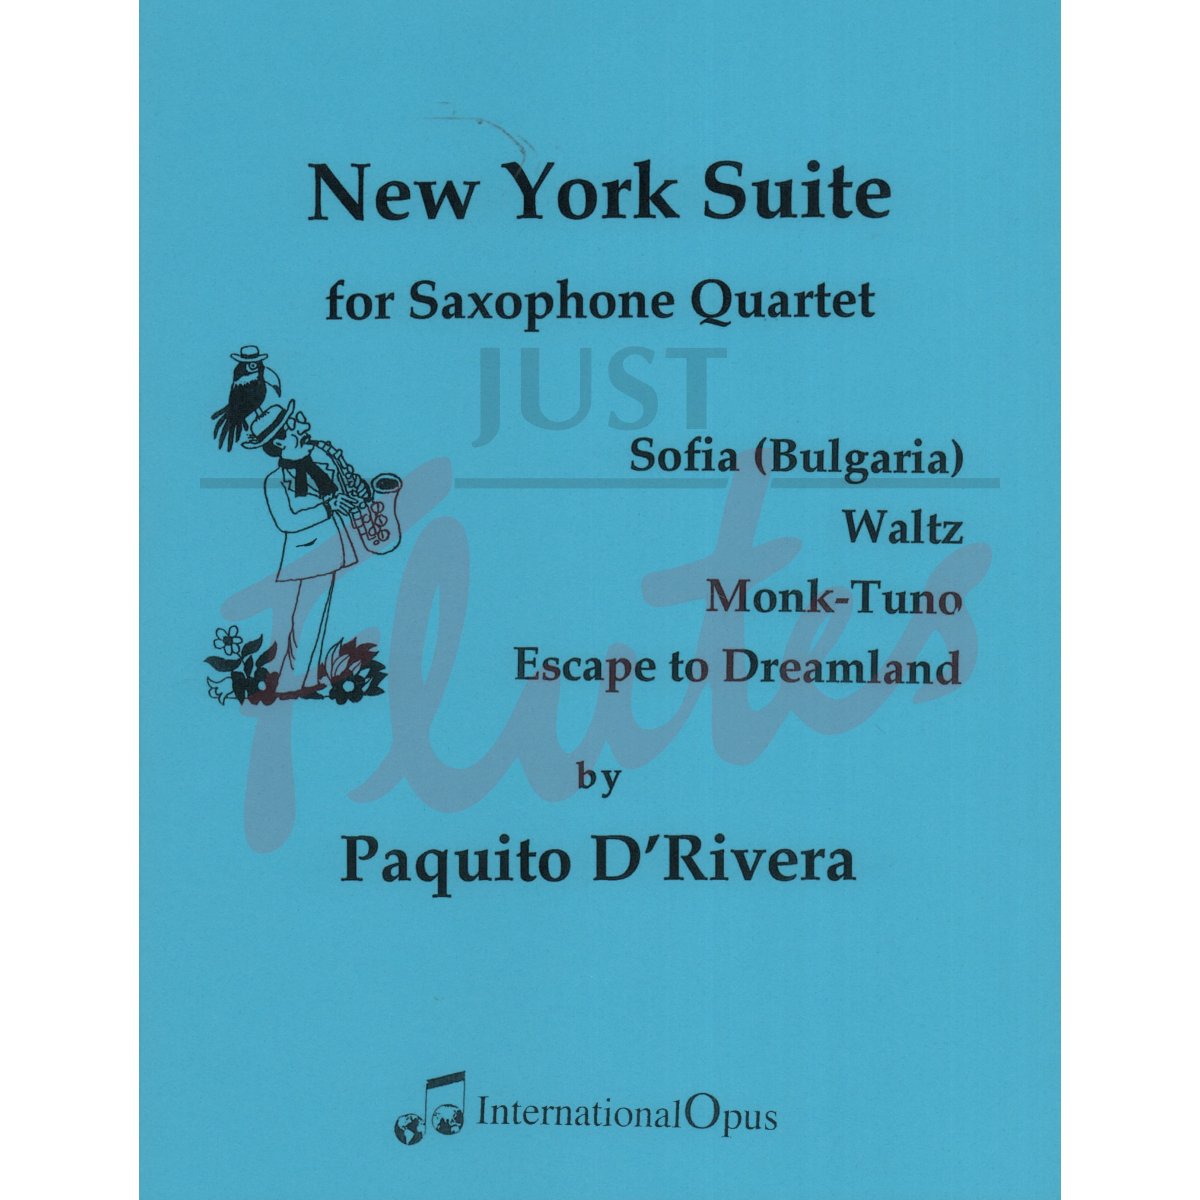 New York Suite for Saxophone Quartet